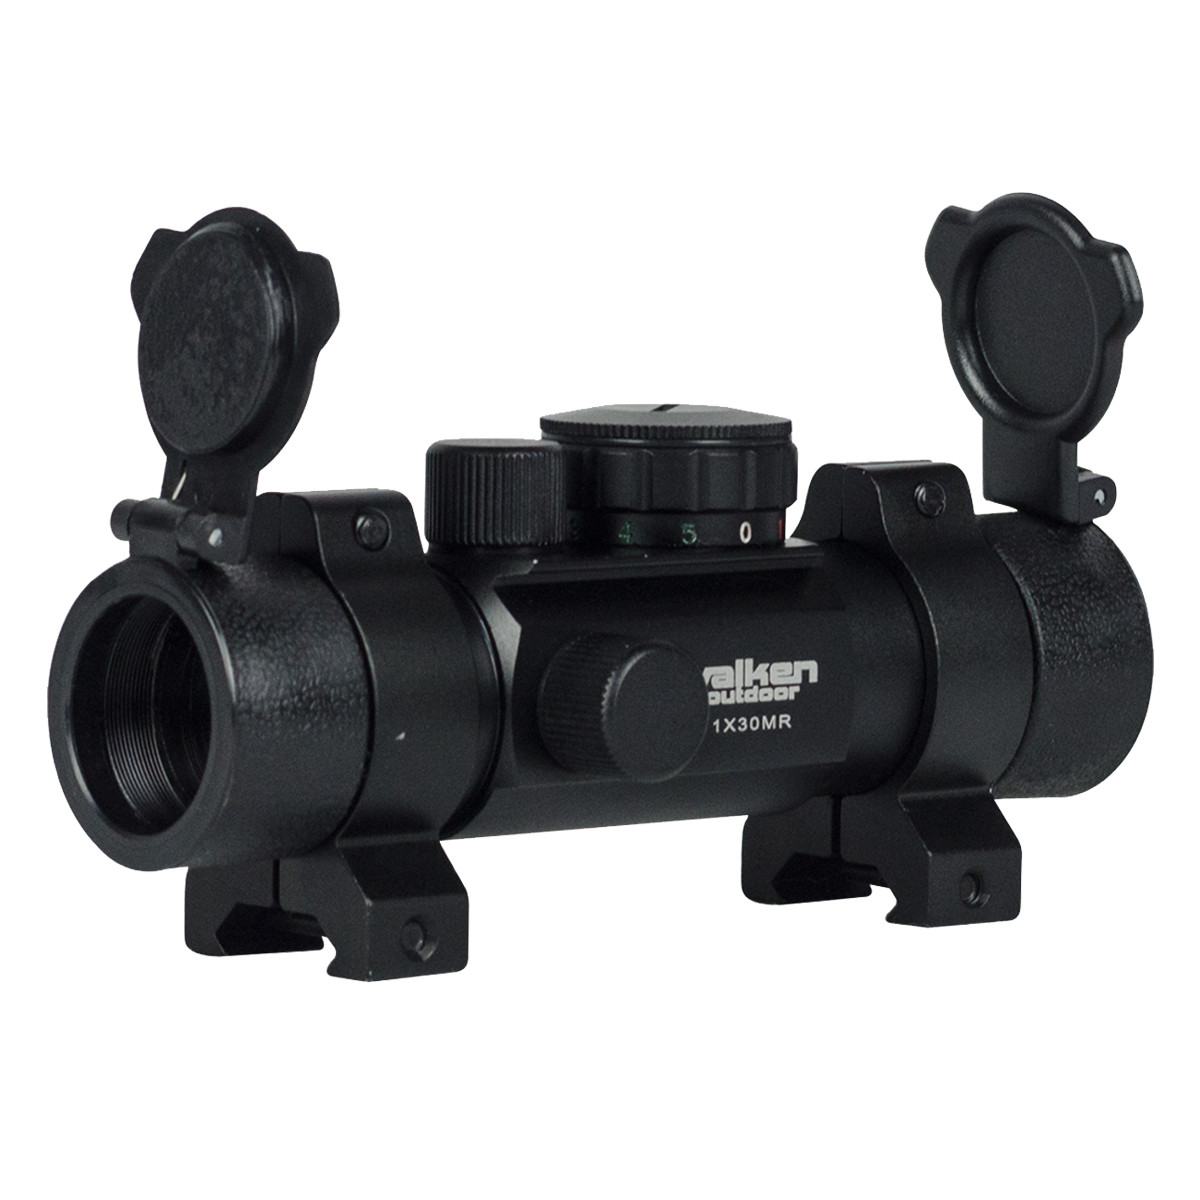 Valken - Optics - Multi-Reticle Red Dot Sight 1x30MR